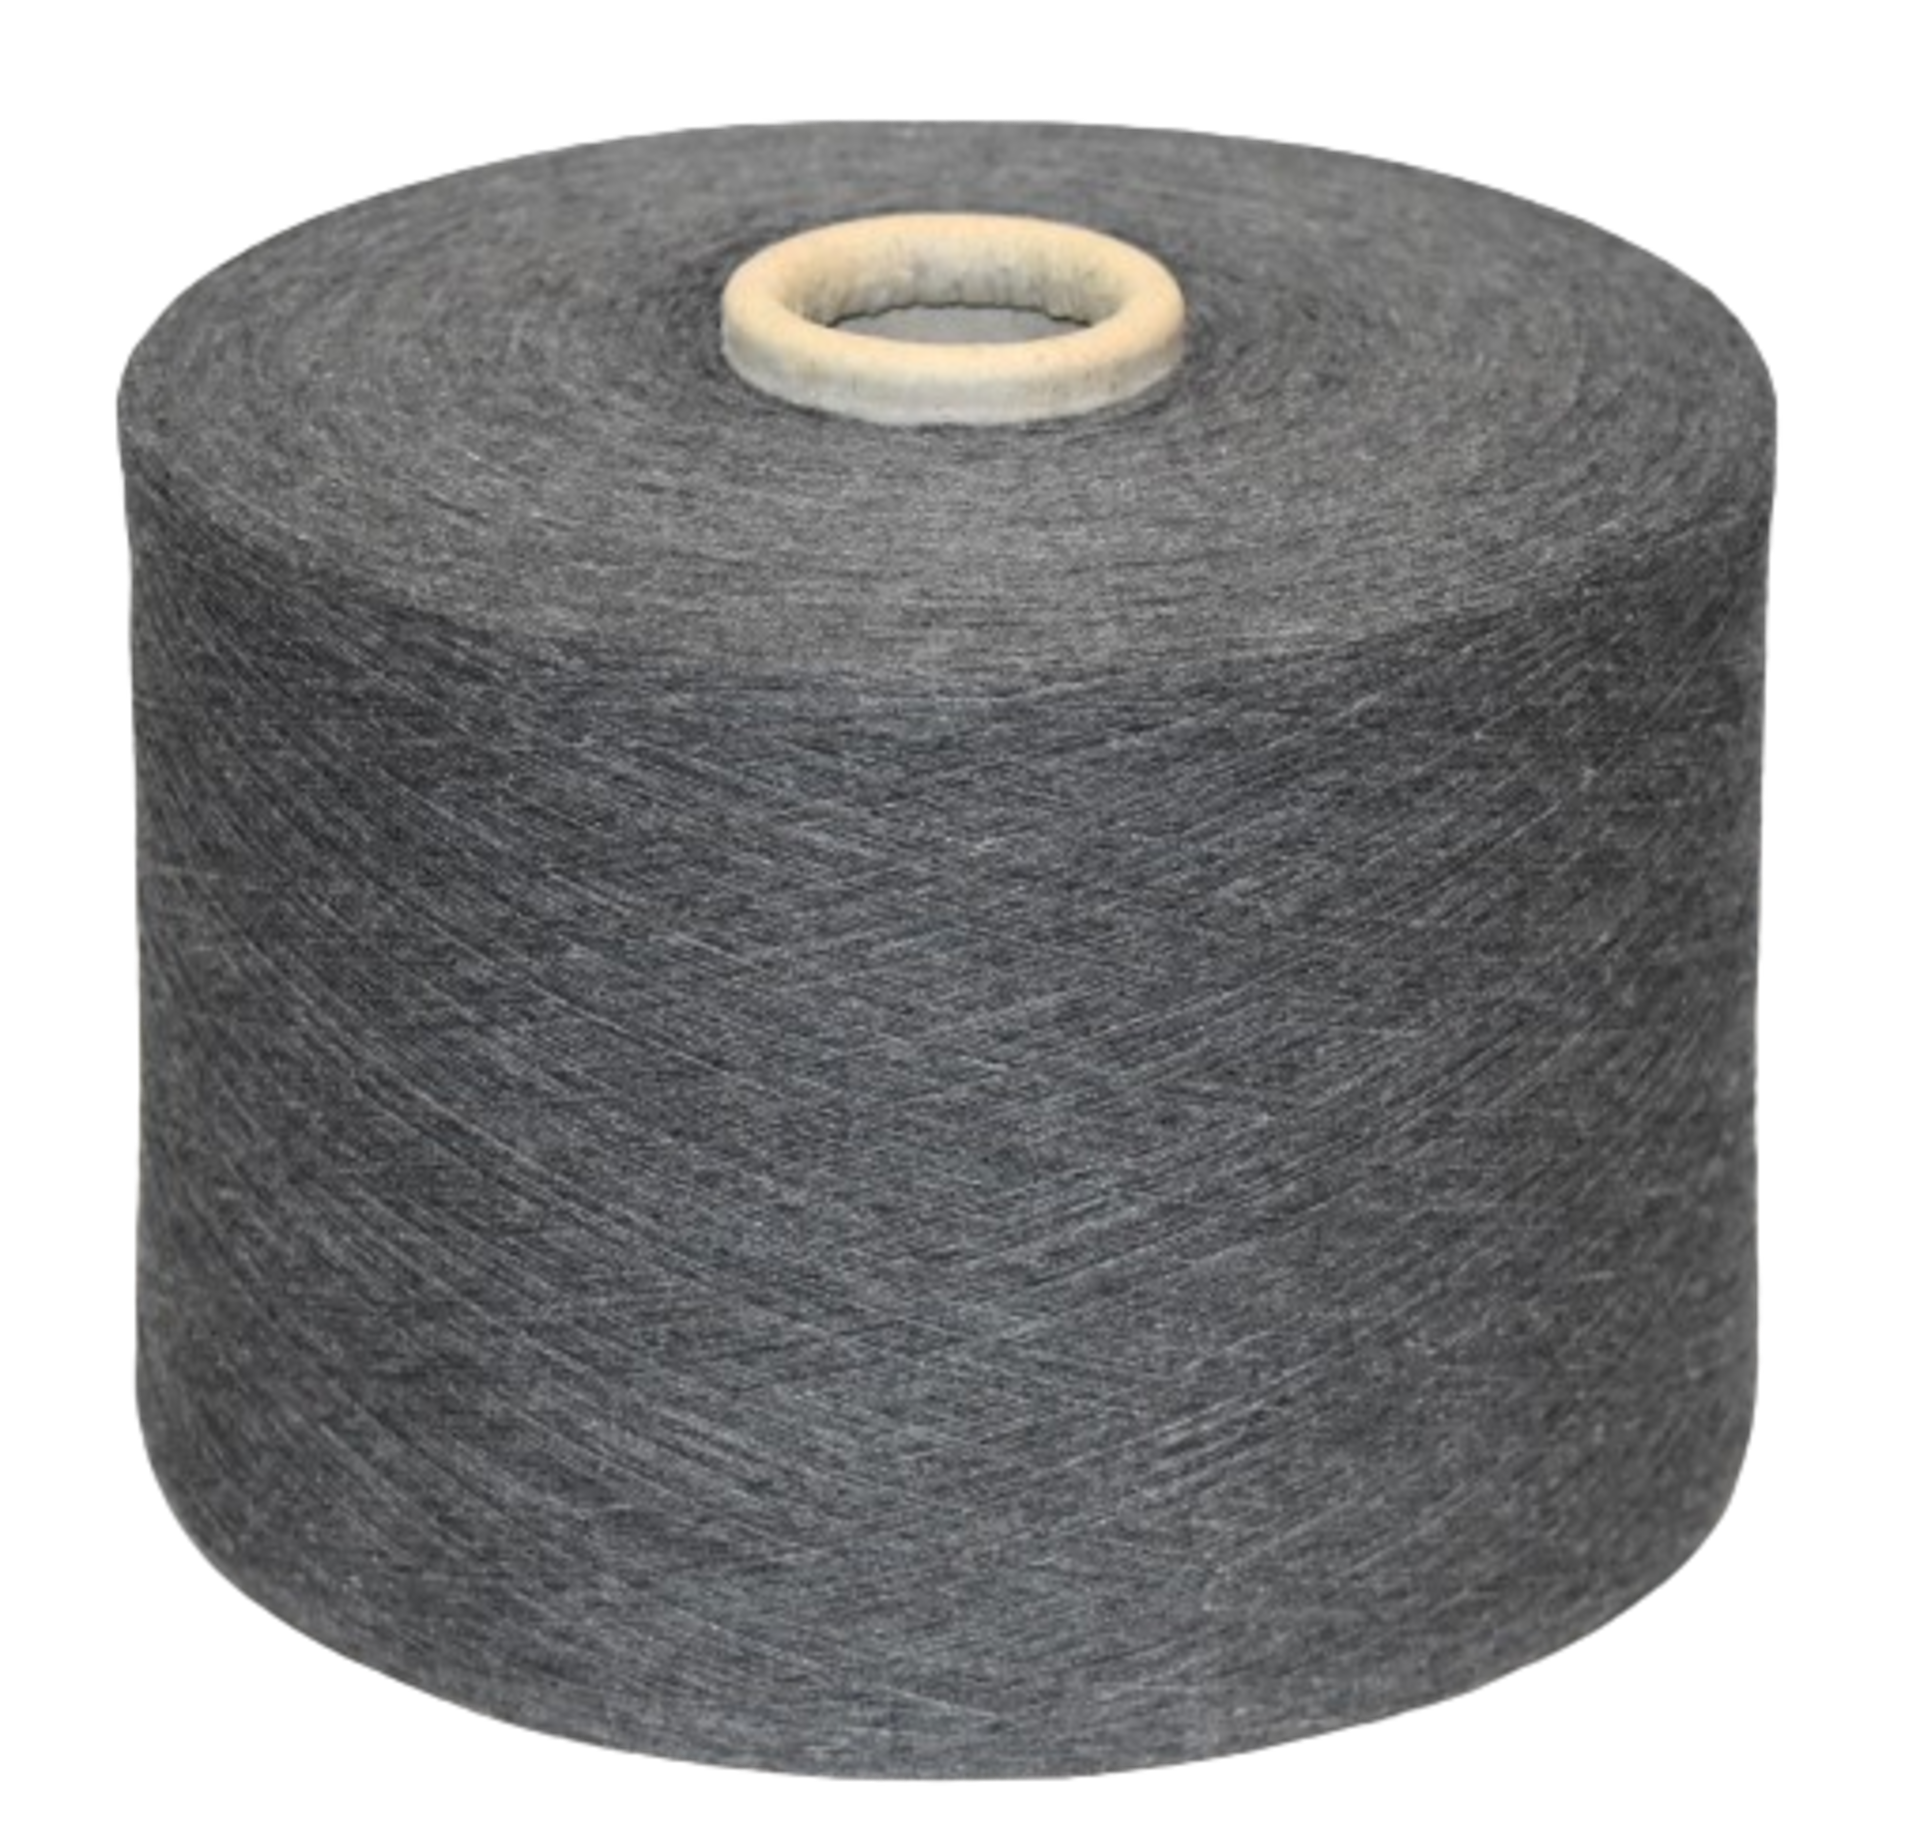 18 x Cones of 1/13 MicroCotton Knitting Yarn - Mid Grey - Approx Weight: 2,500g - New Stock ABL Yarn